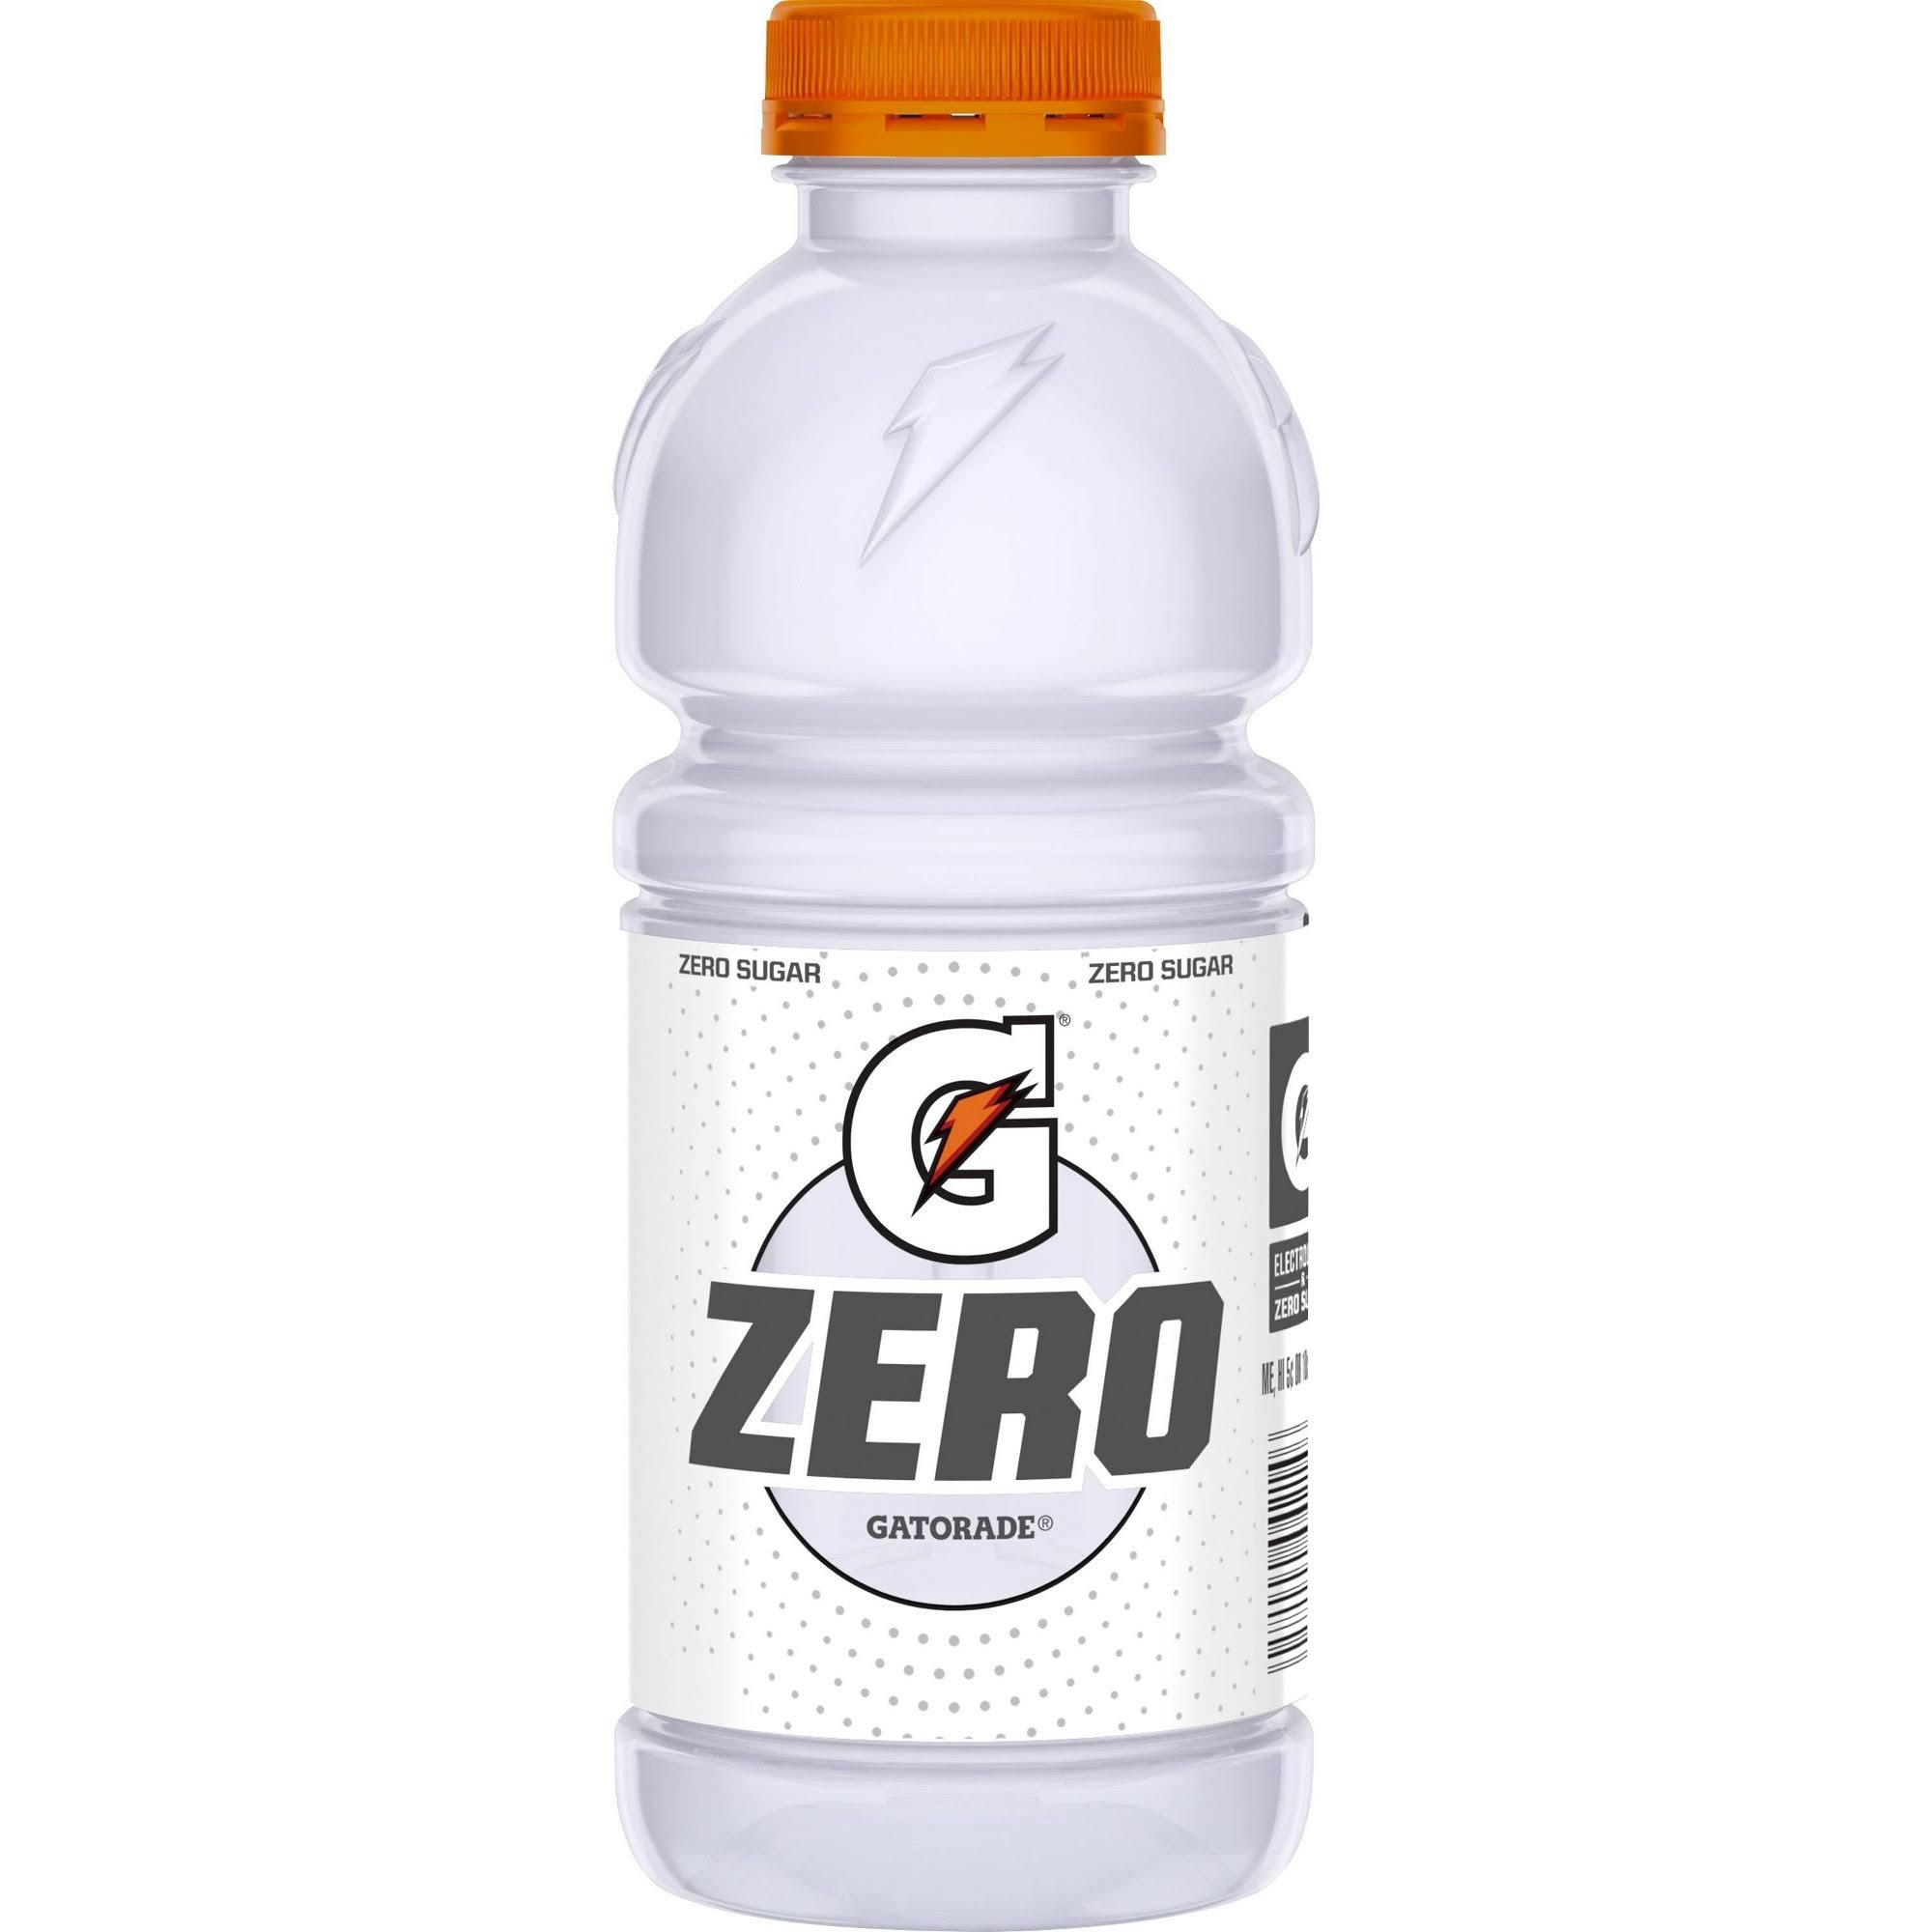 Gatorade Zero Glacier Cherry Zero Sugar Drink - 20oz